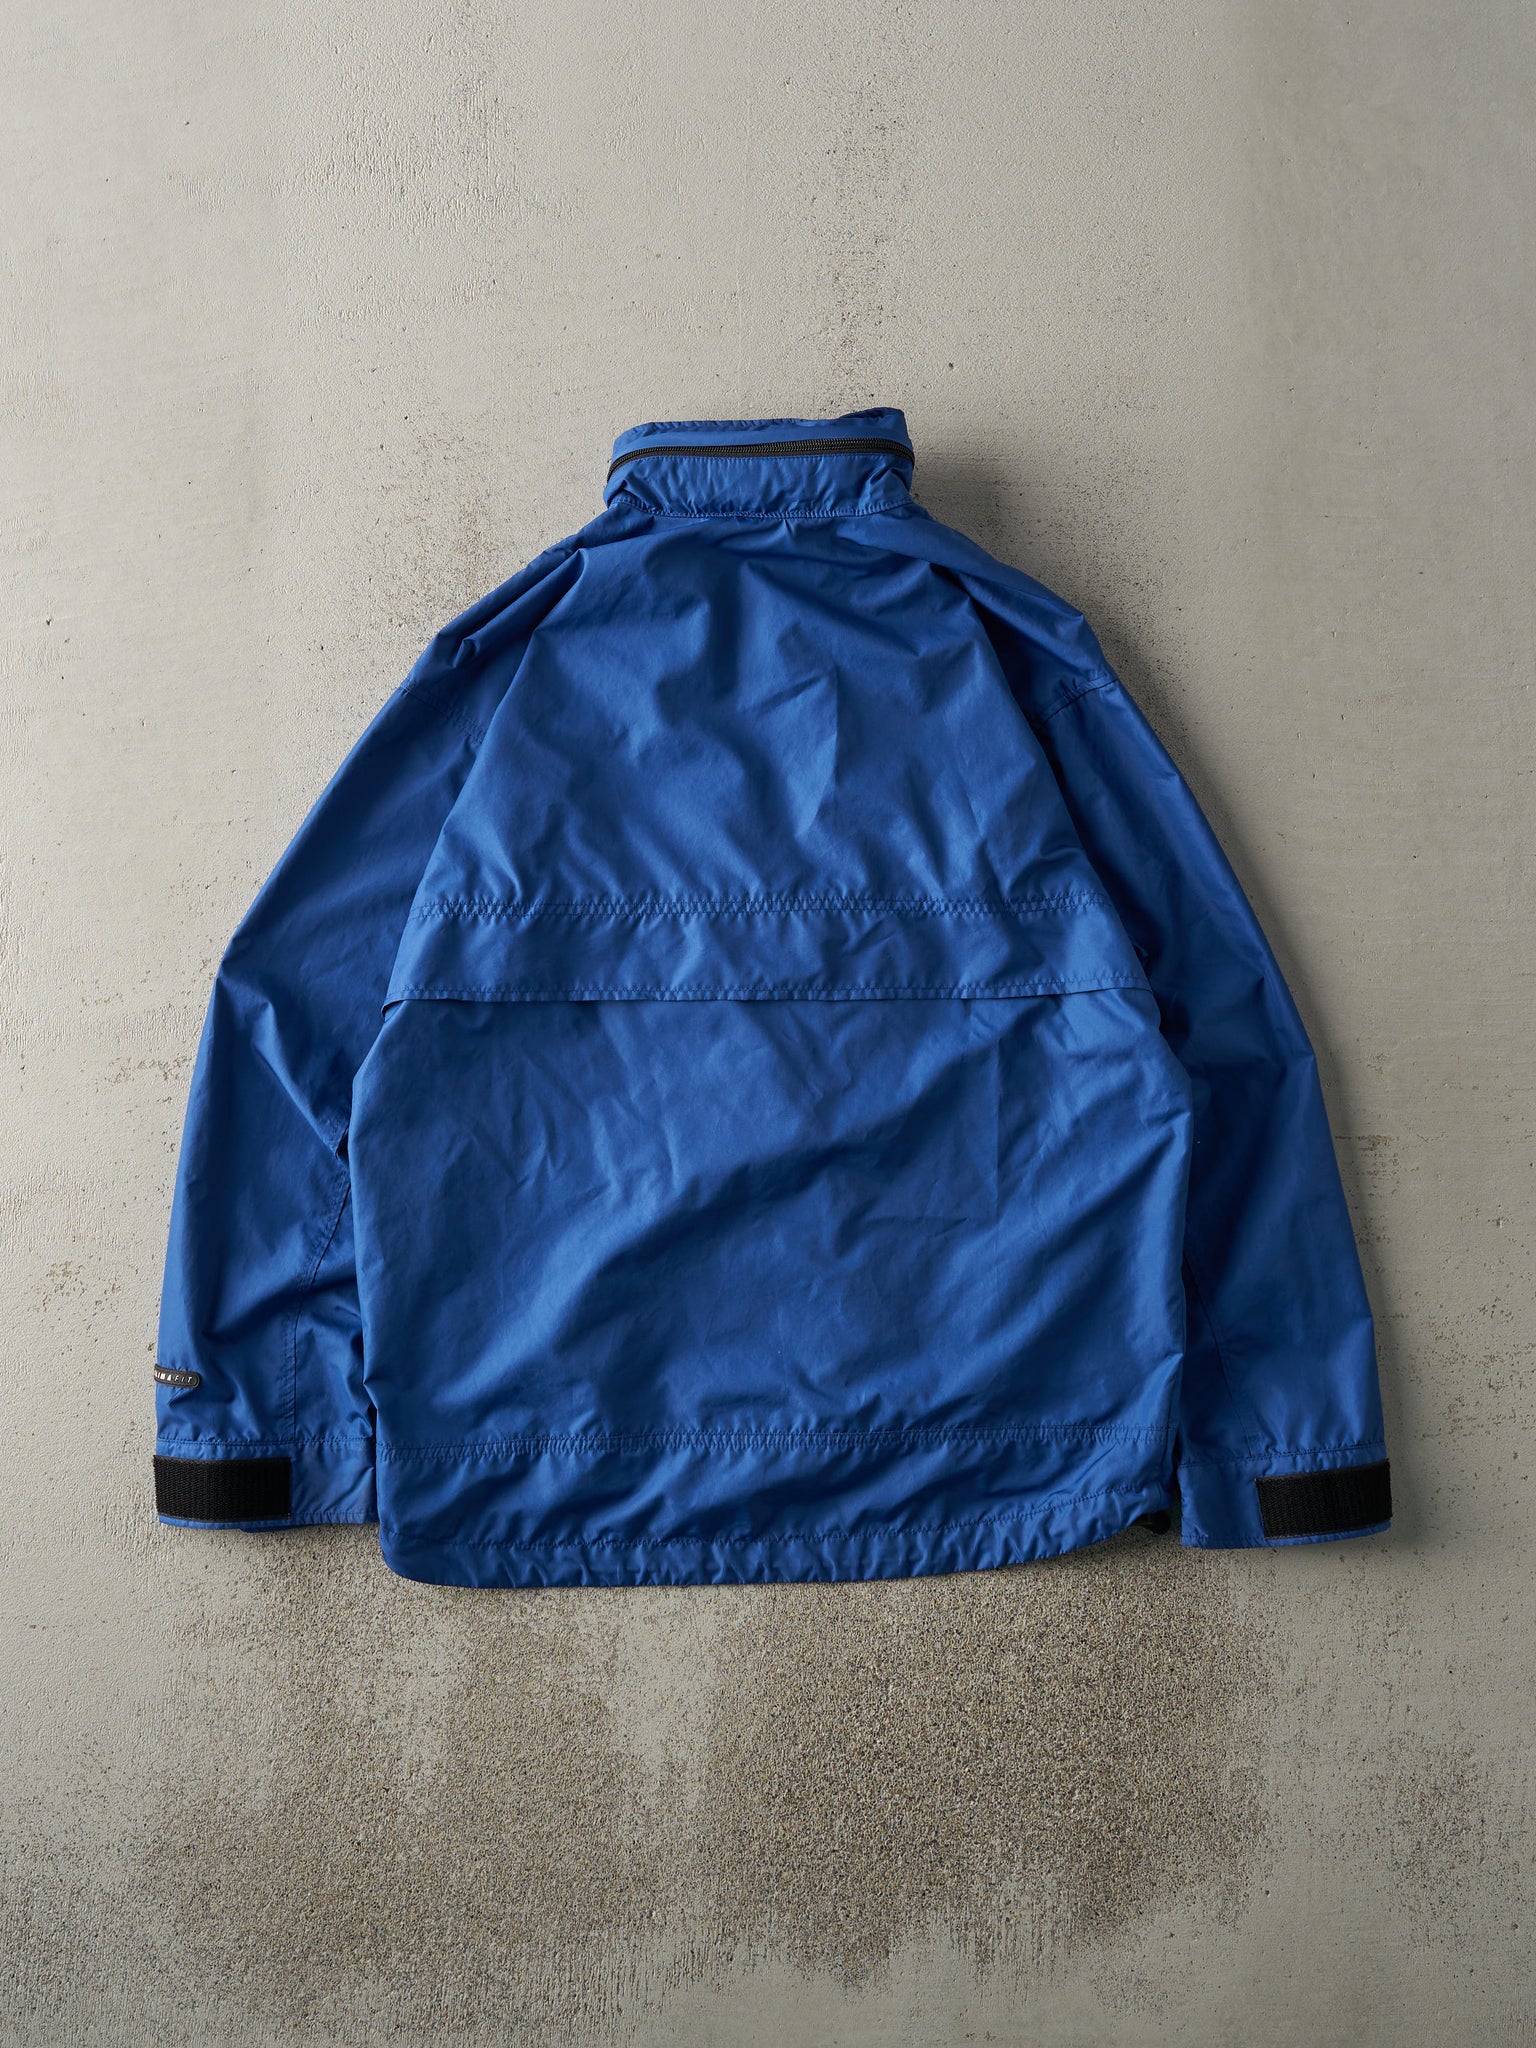 Vintage 90s Blue Embroidered Nike Zip Up Windbreaker Jacket (S/M)